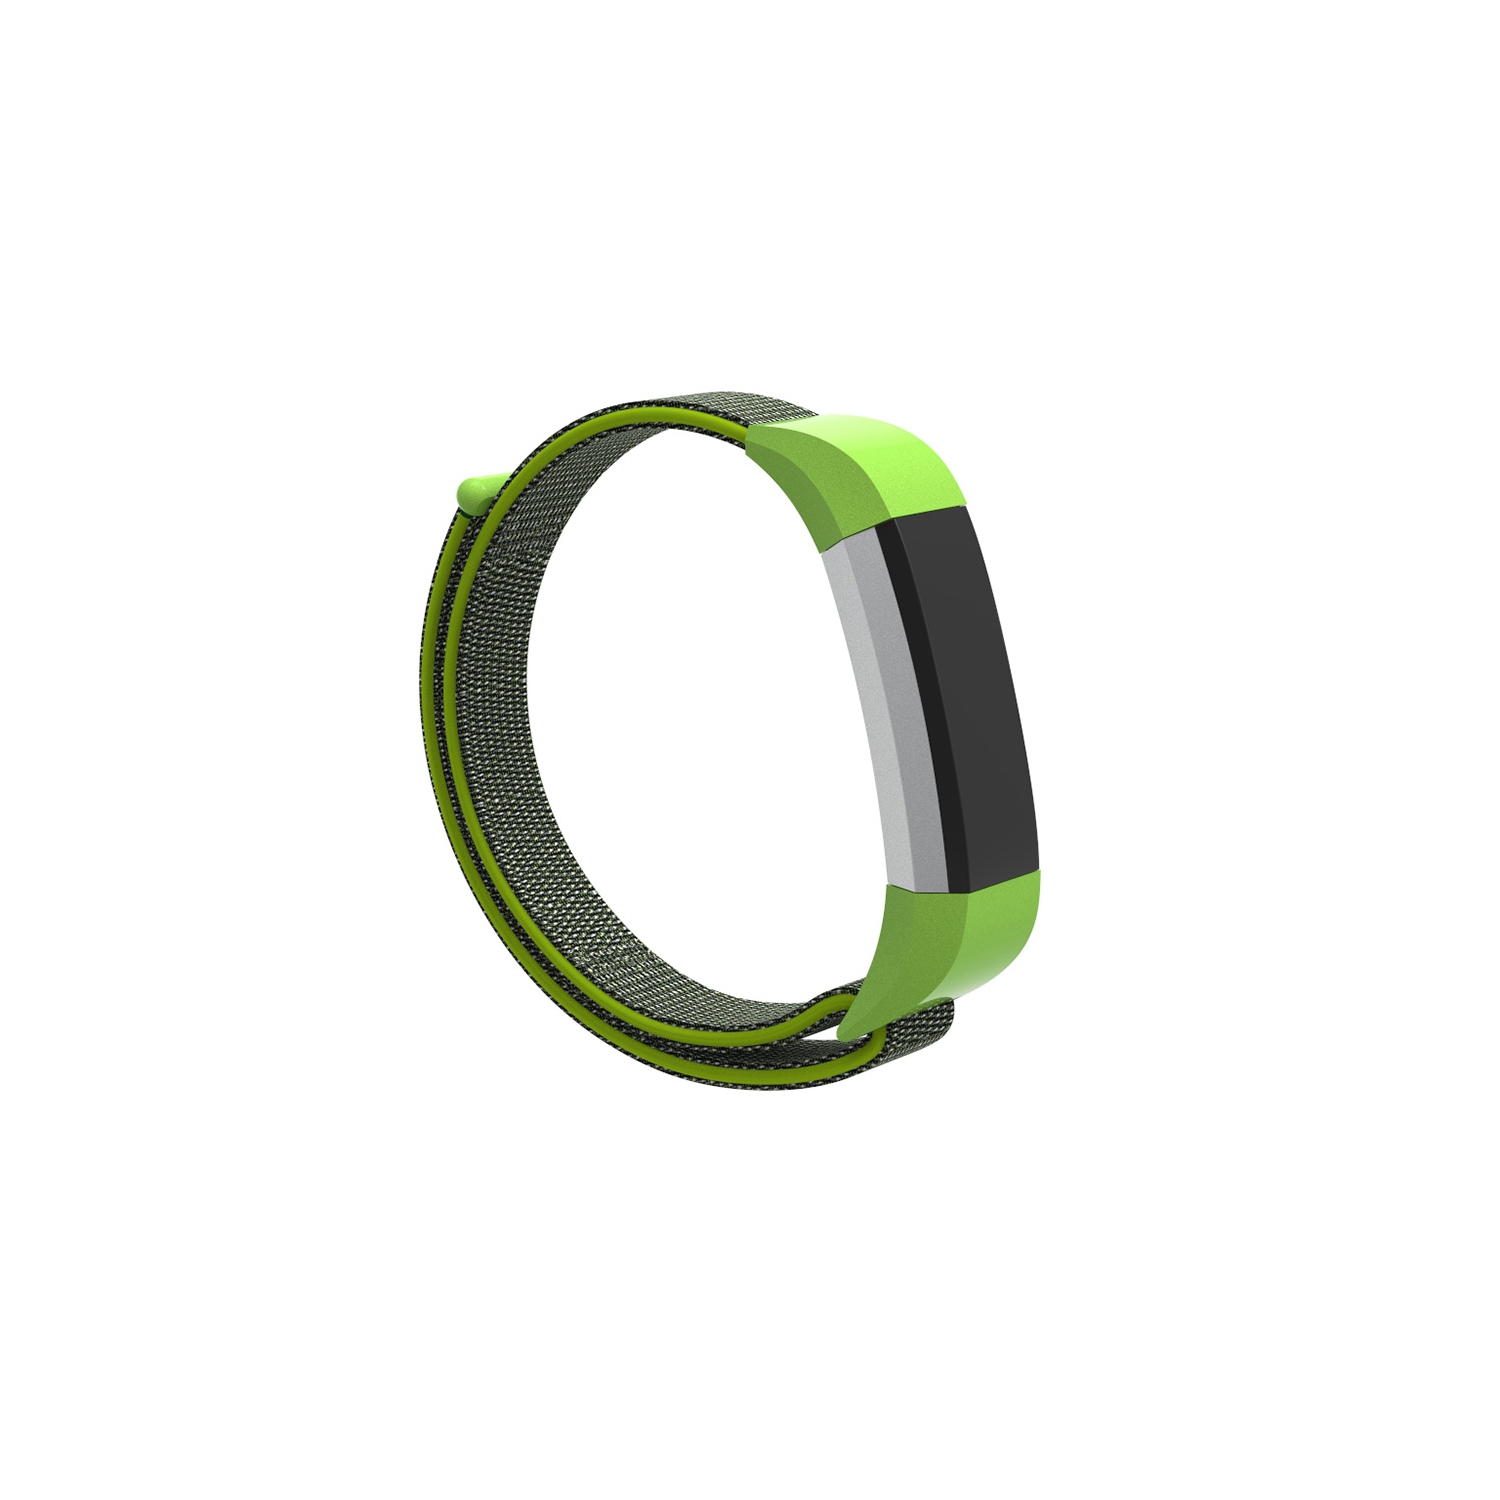 StrapsCo Woven Nylon Watch Band Strap for Fitbit Alta & Alta HR - Neon Green & Grey